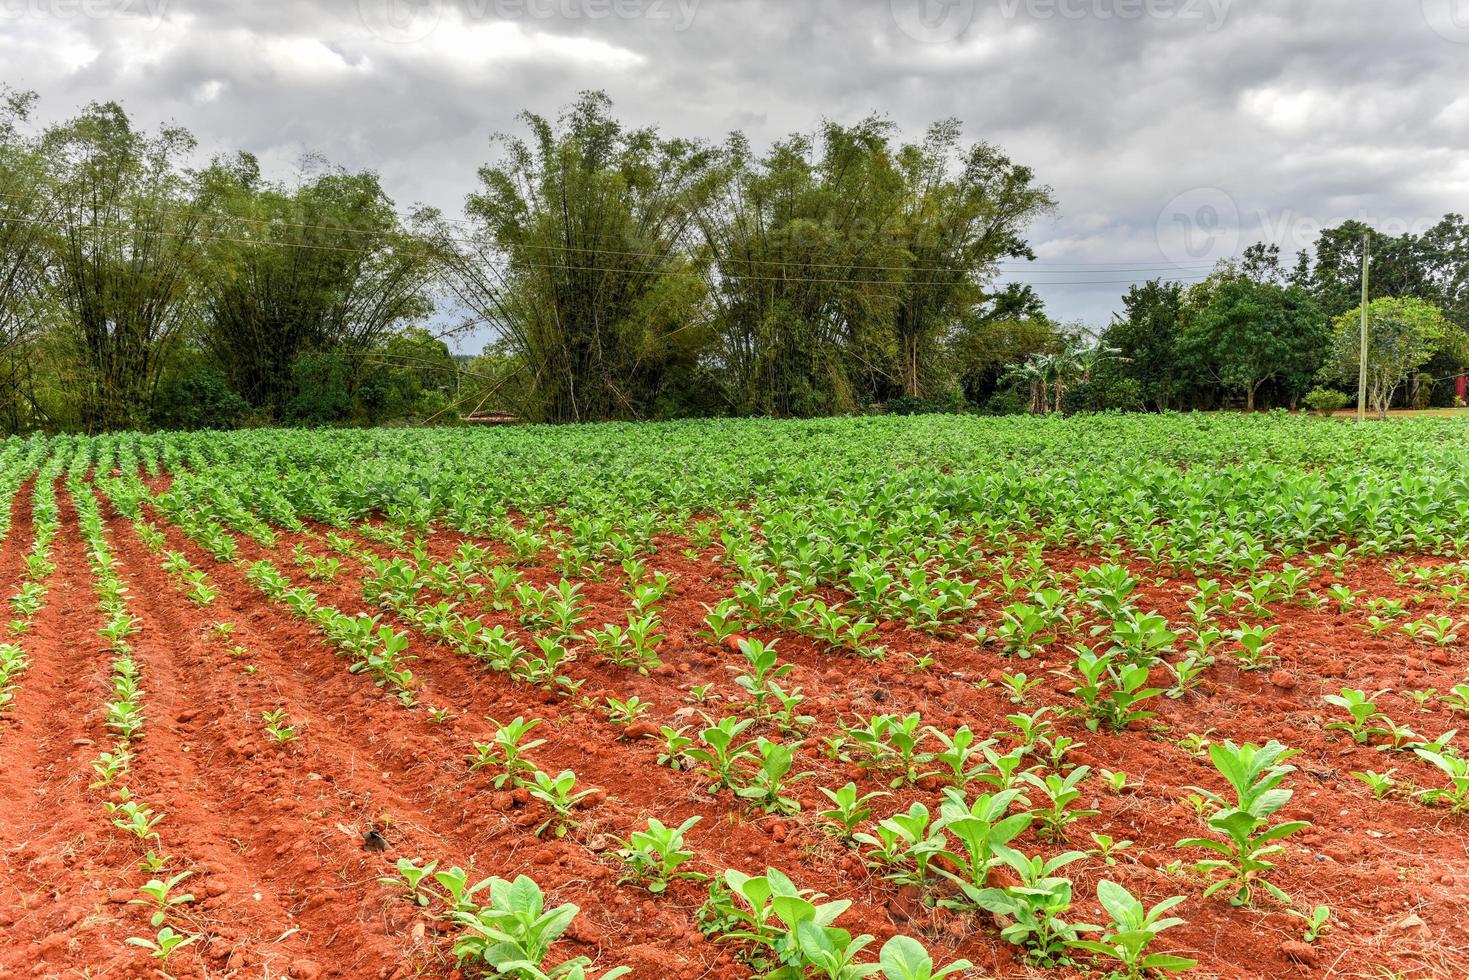 tabak plantage in de vinales vallei, noorden van Cuba. foto